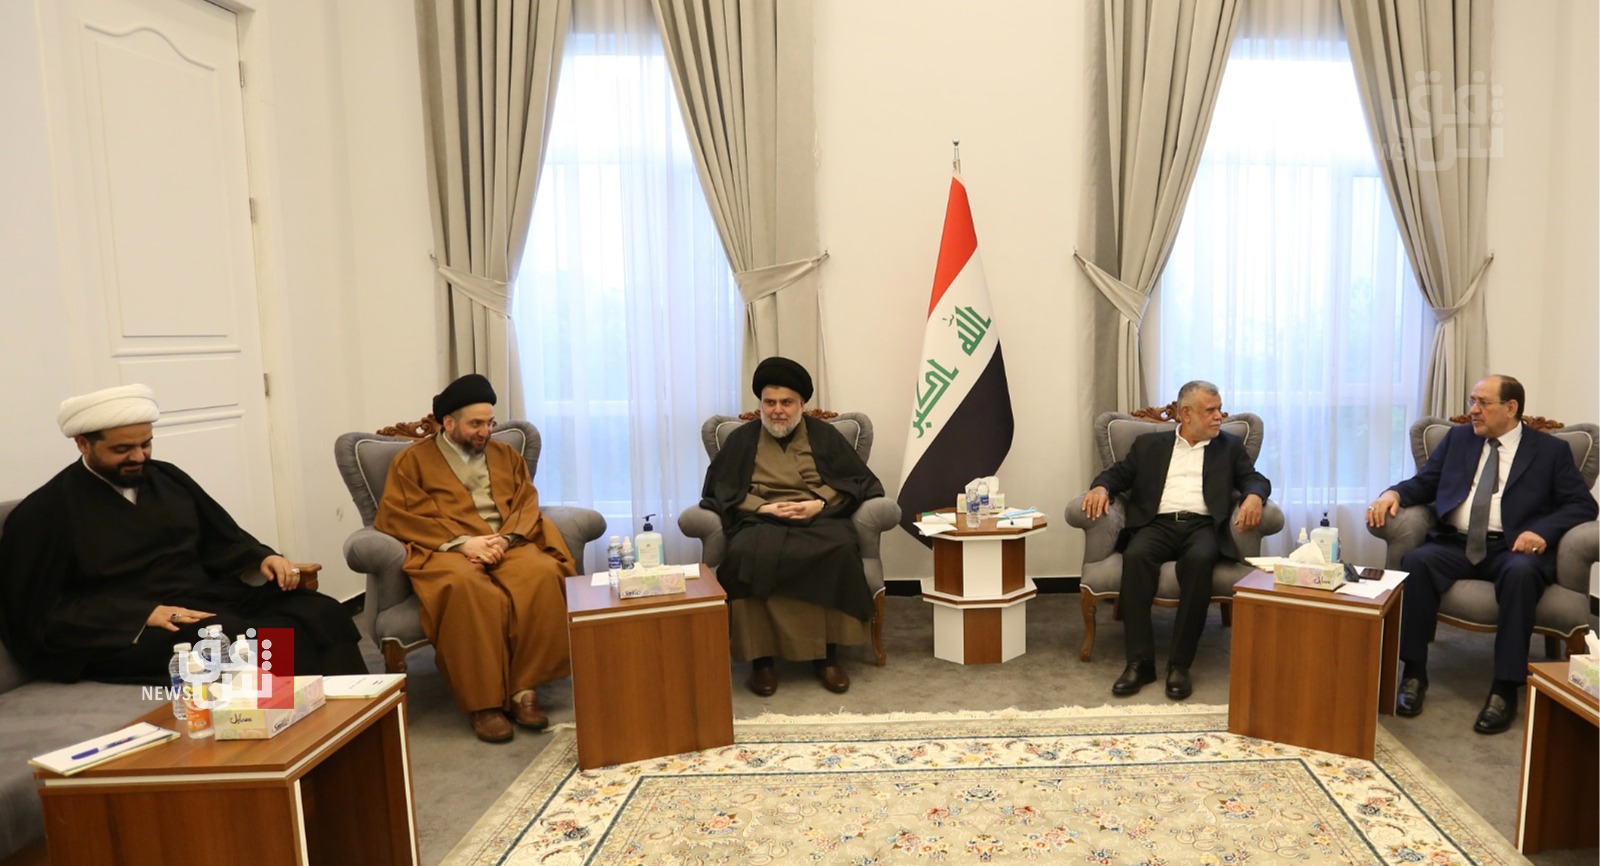 Moqtada al-Sadr aspires to implement grand changes in Iraq- Report